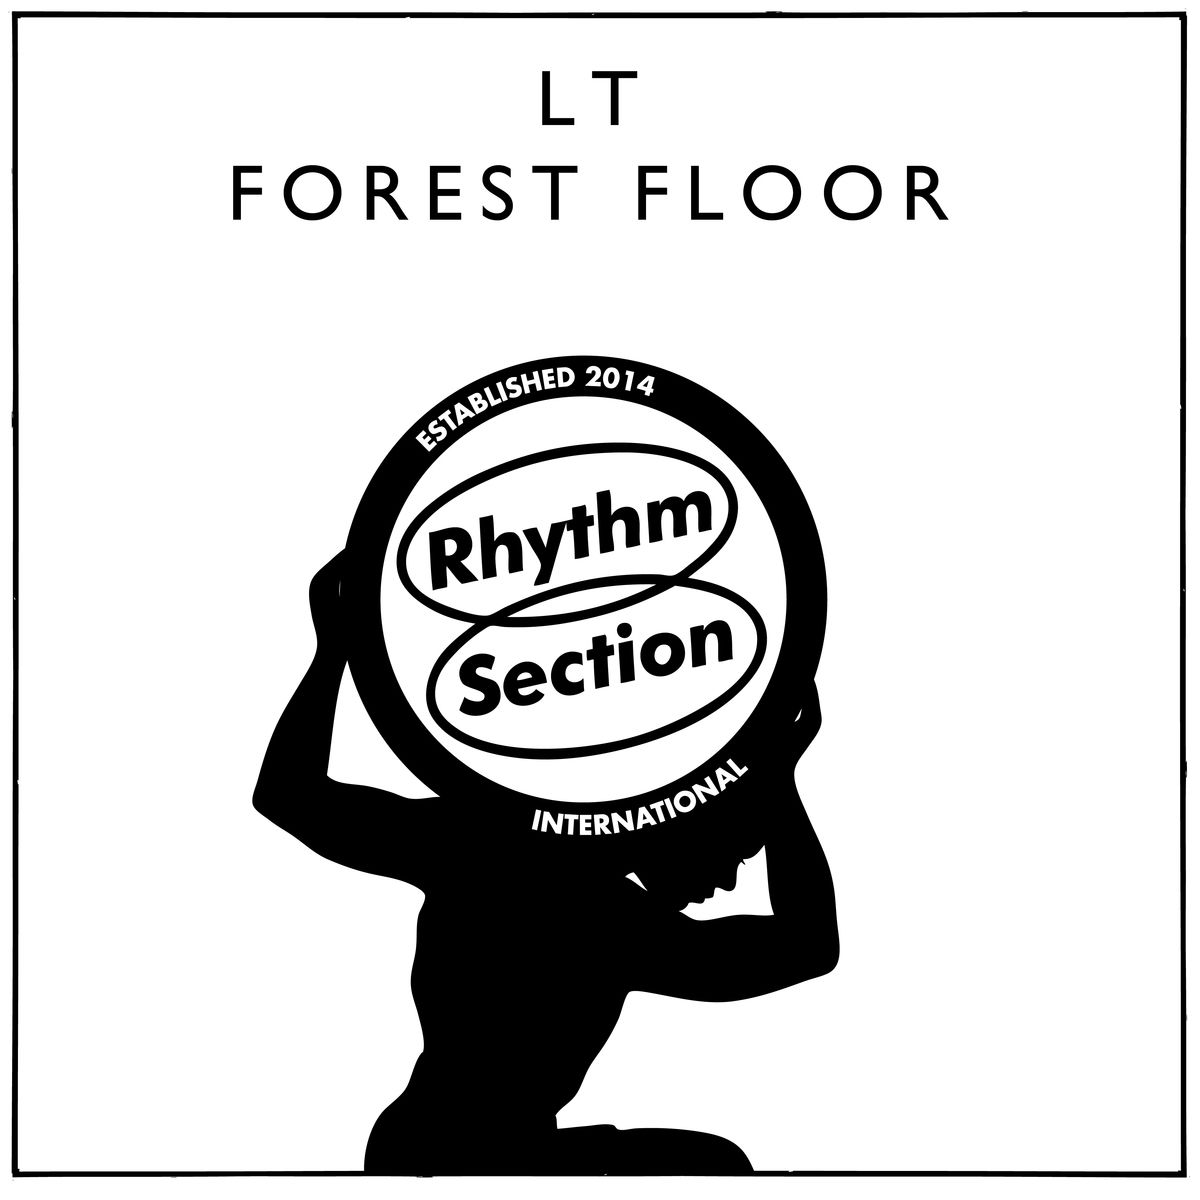 LT - Forest Floor / Rhythm Section International